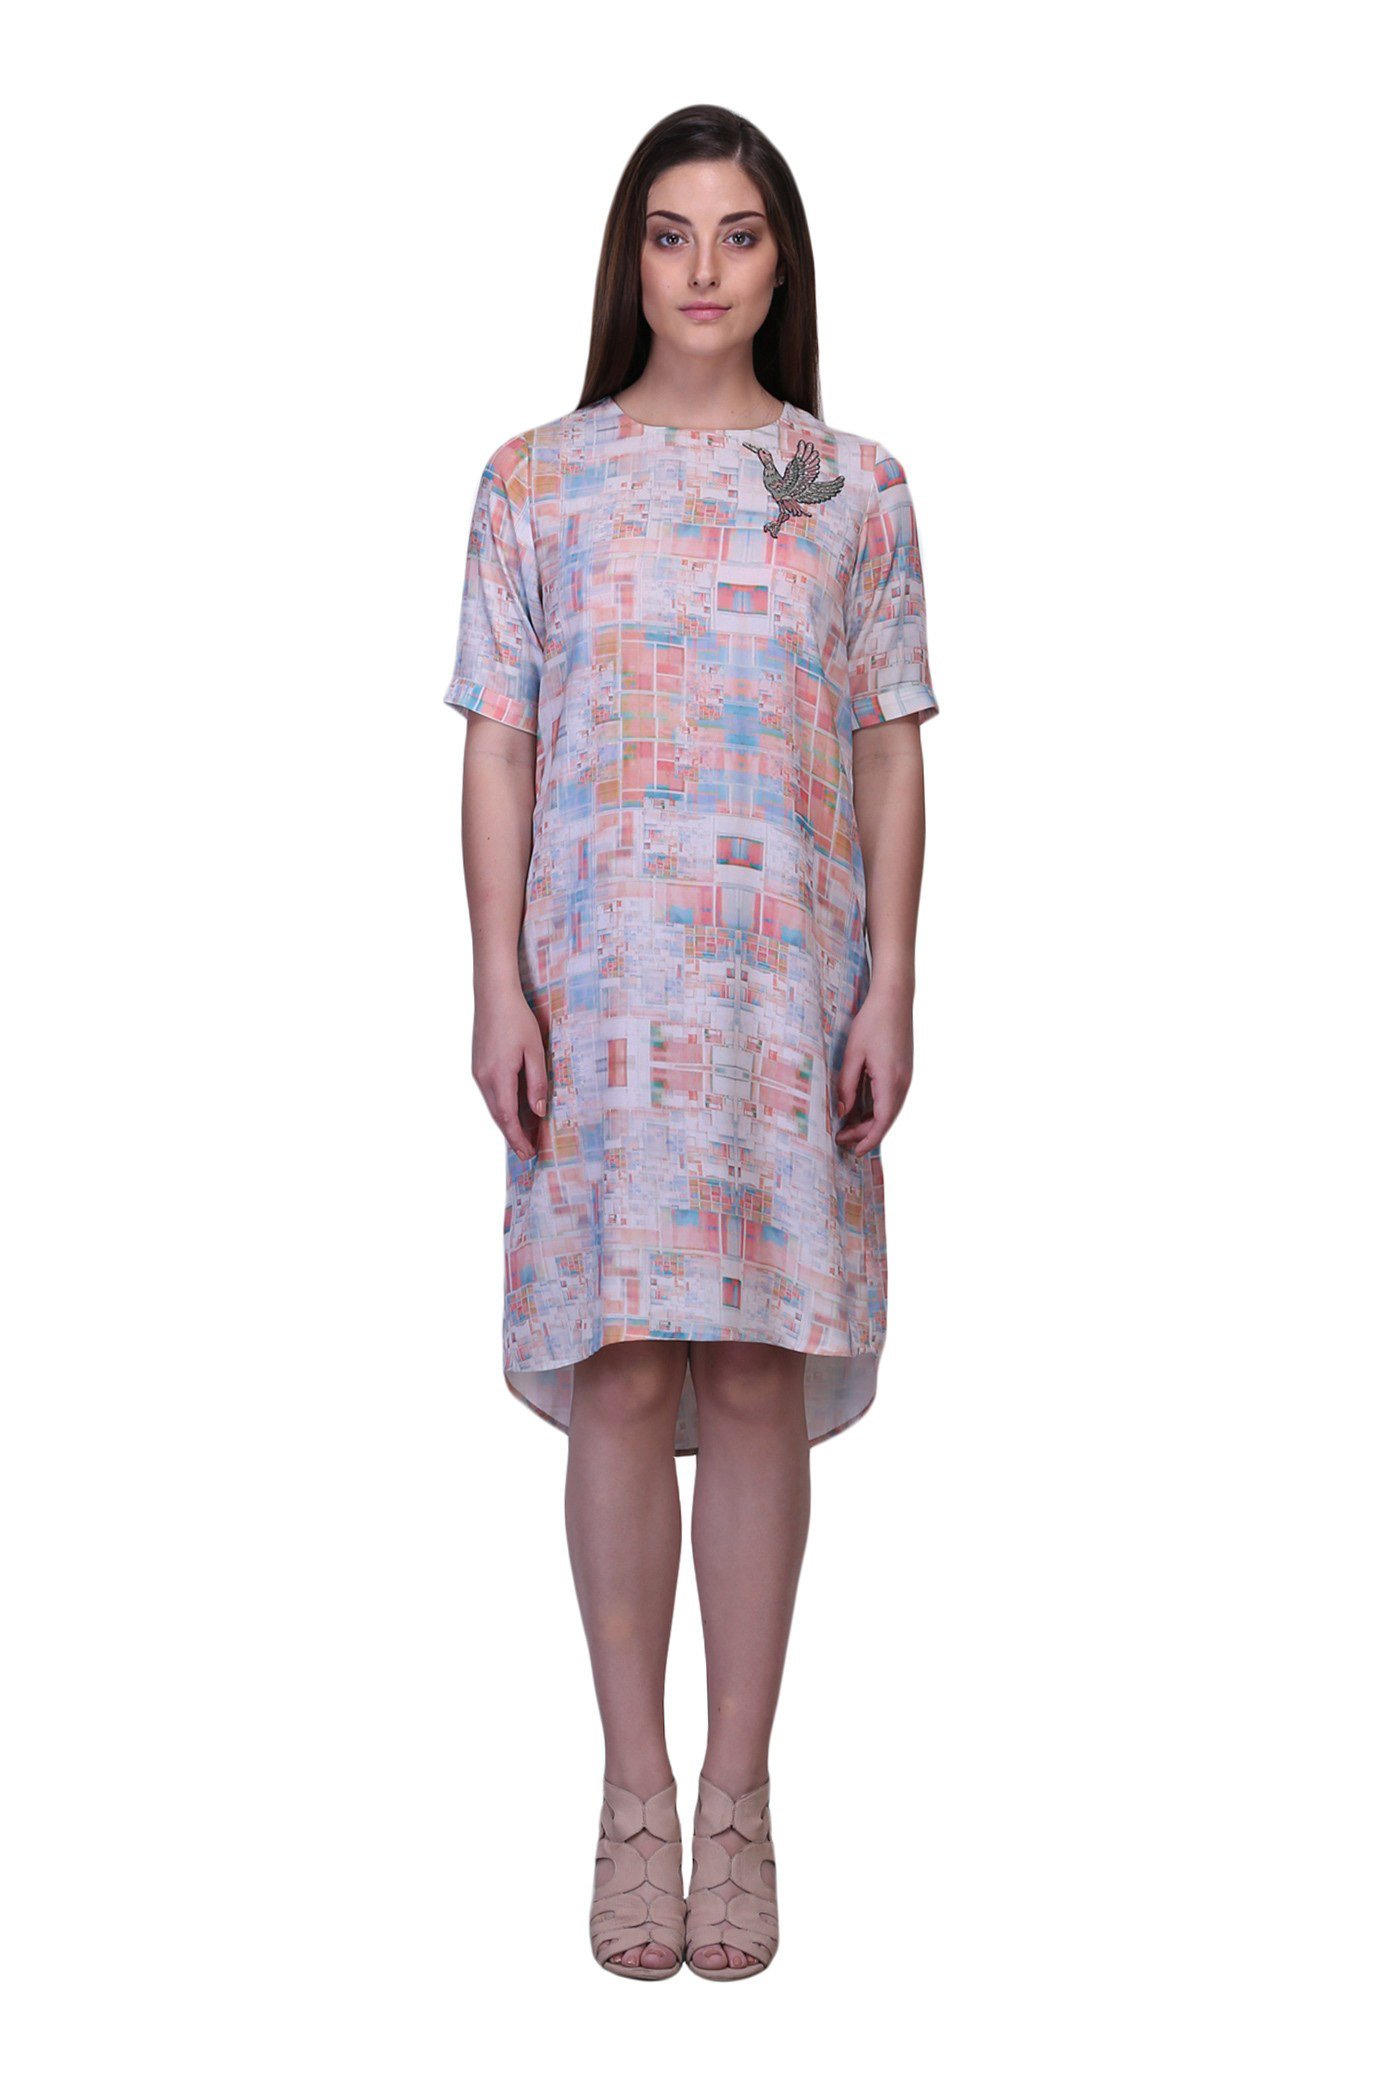 apparel Clothing day dress Embroidery Fashion  print prints textile textile design 